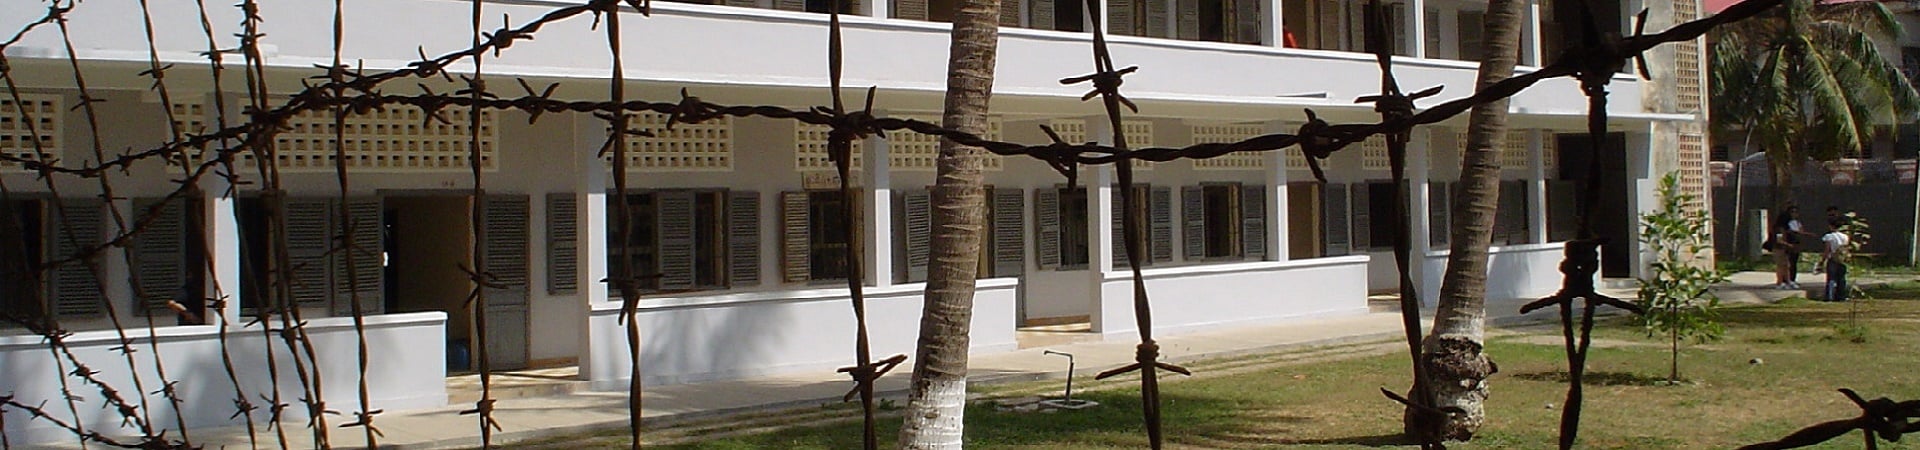 Image of Tuol Sleng & Killing Fields